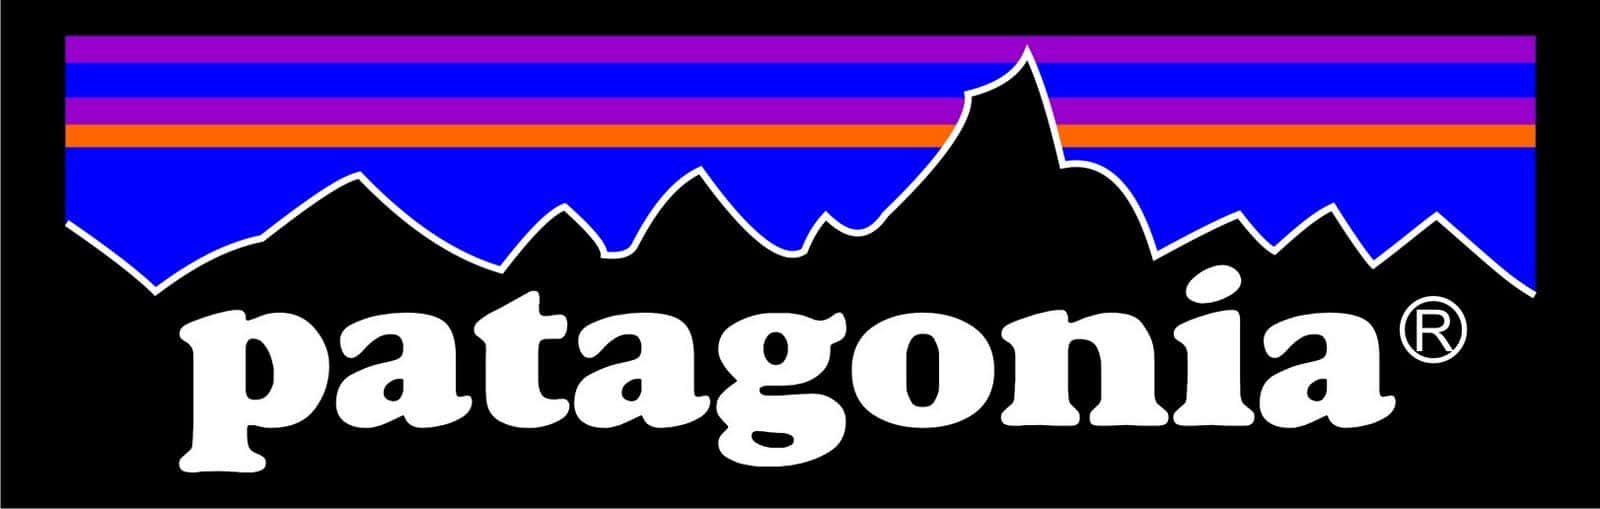 Baggrundmed Patagonia-logo